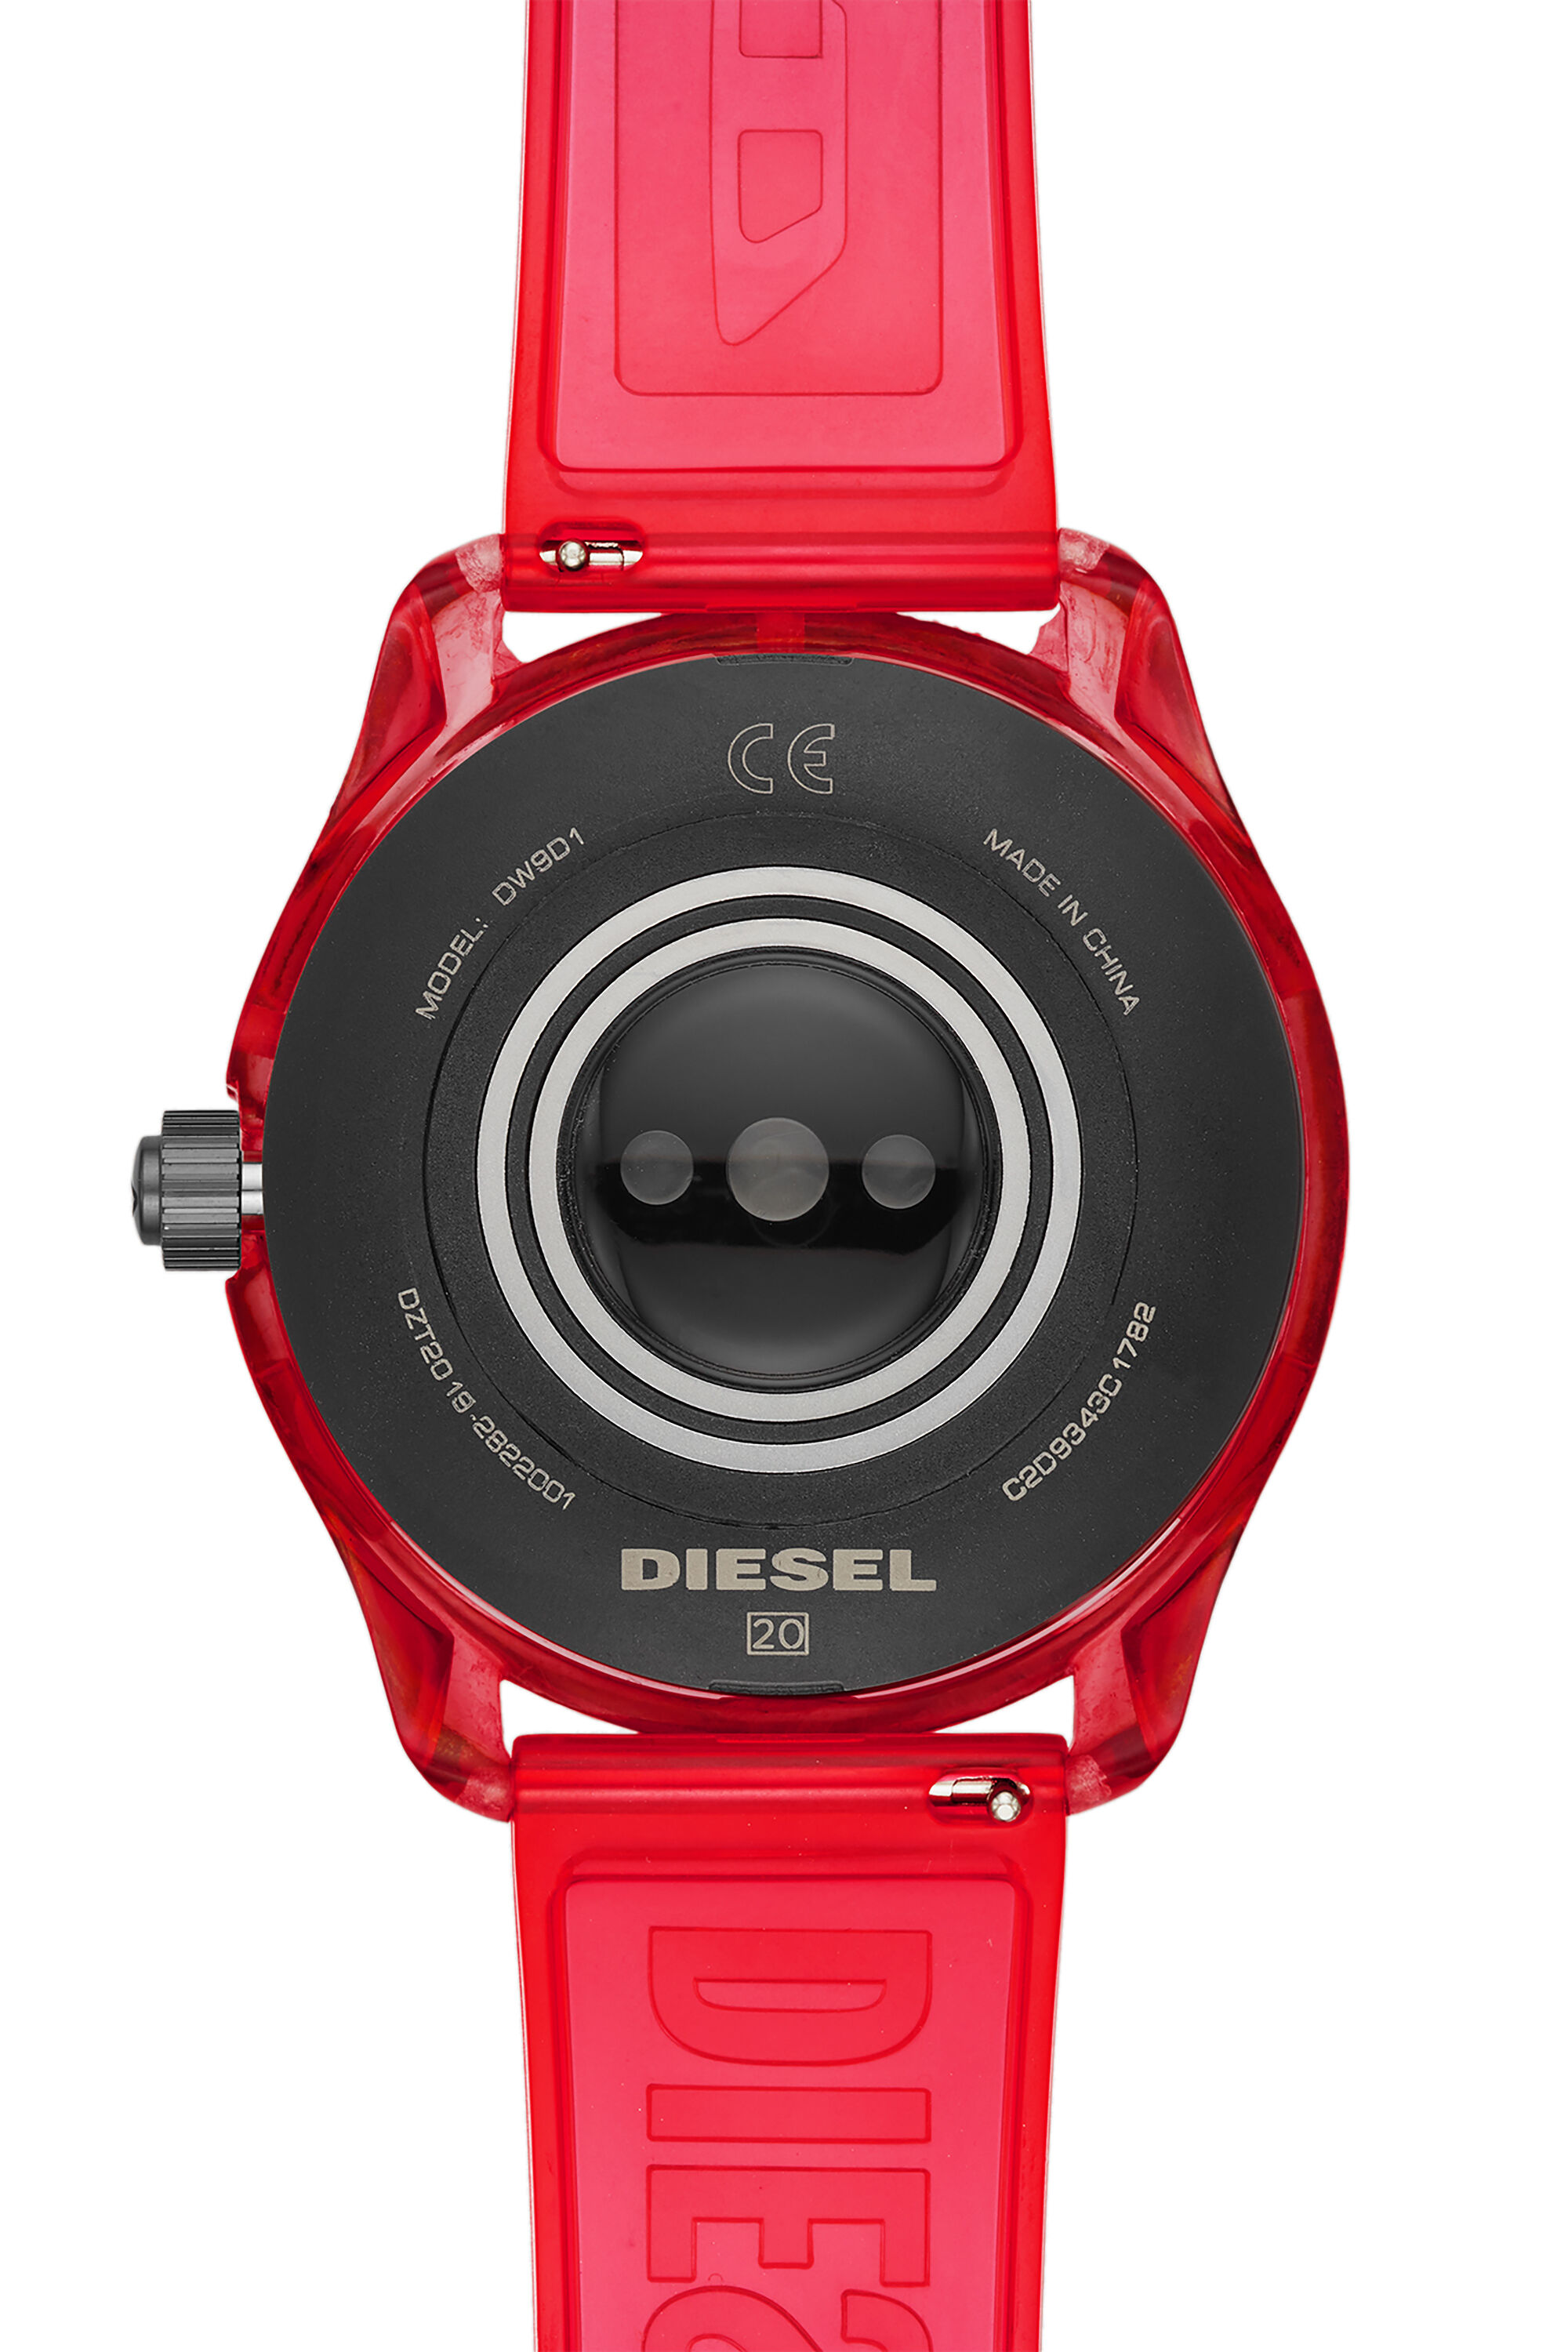 Diesel - DT2019, Male Diesel On Fadelite Smartwatch - Red Transparent in レッド - Image 4